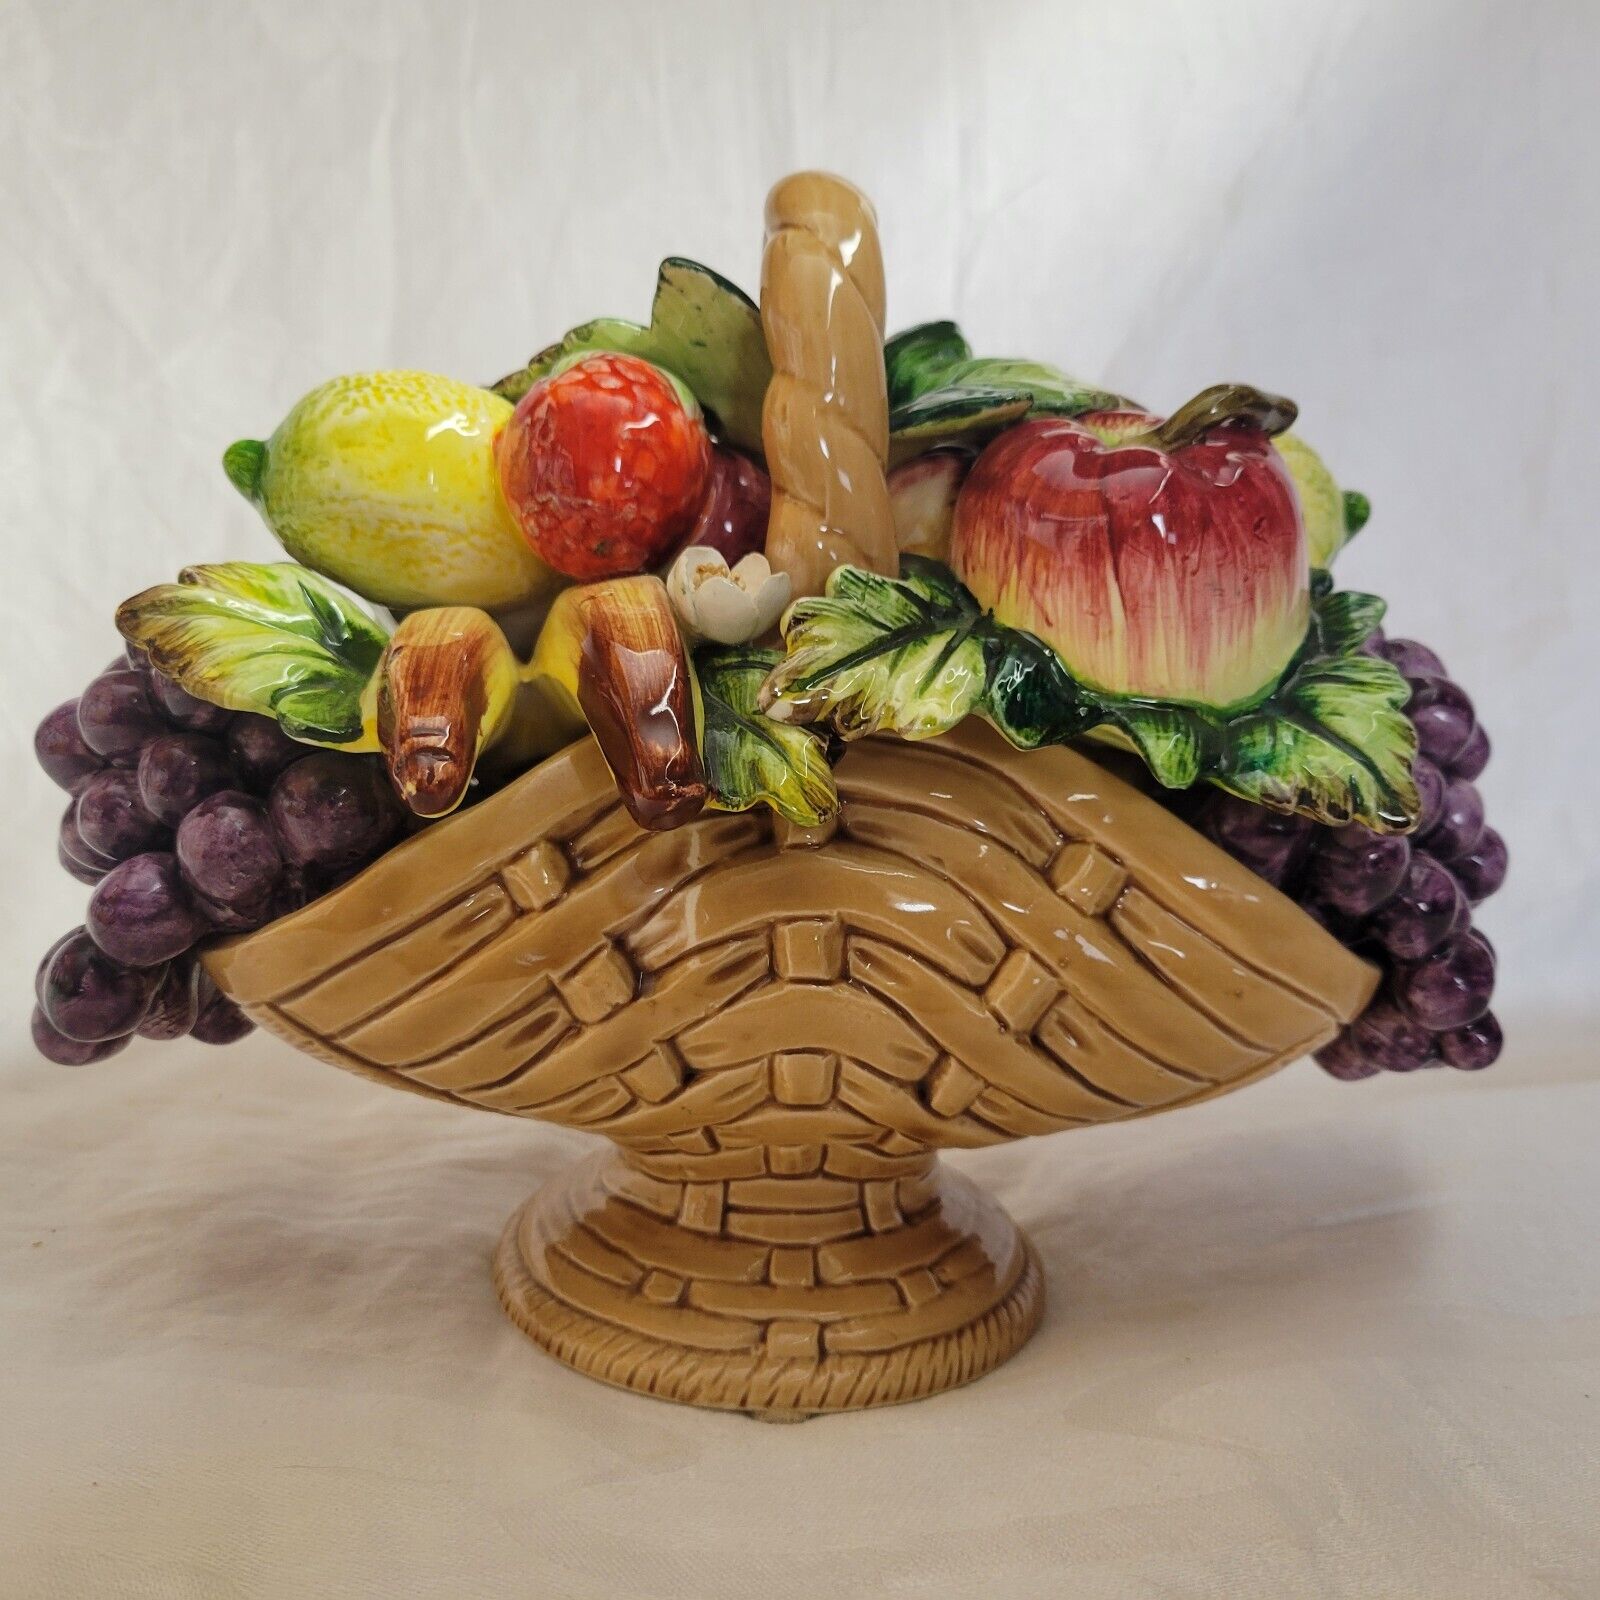 Vintage Japan porcelain Fruit Basket # 11/479 crown? grape lemon Majolica Capo?